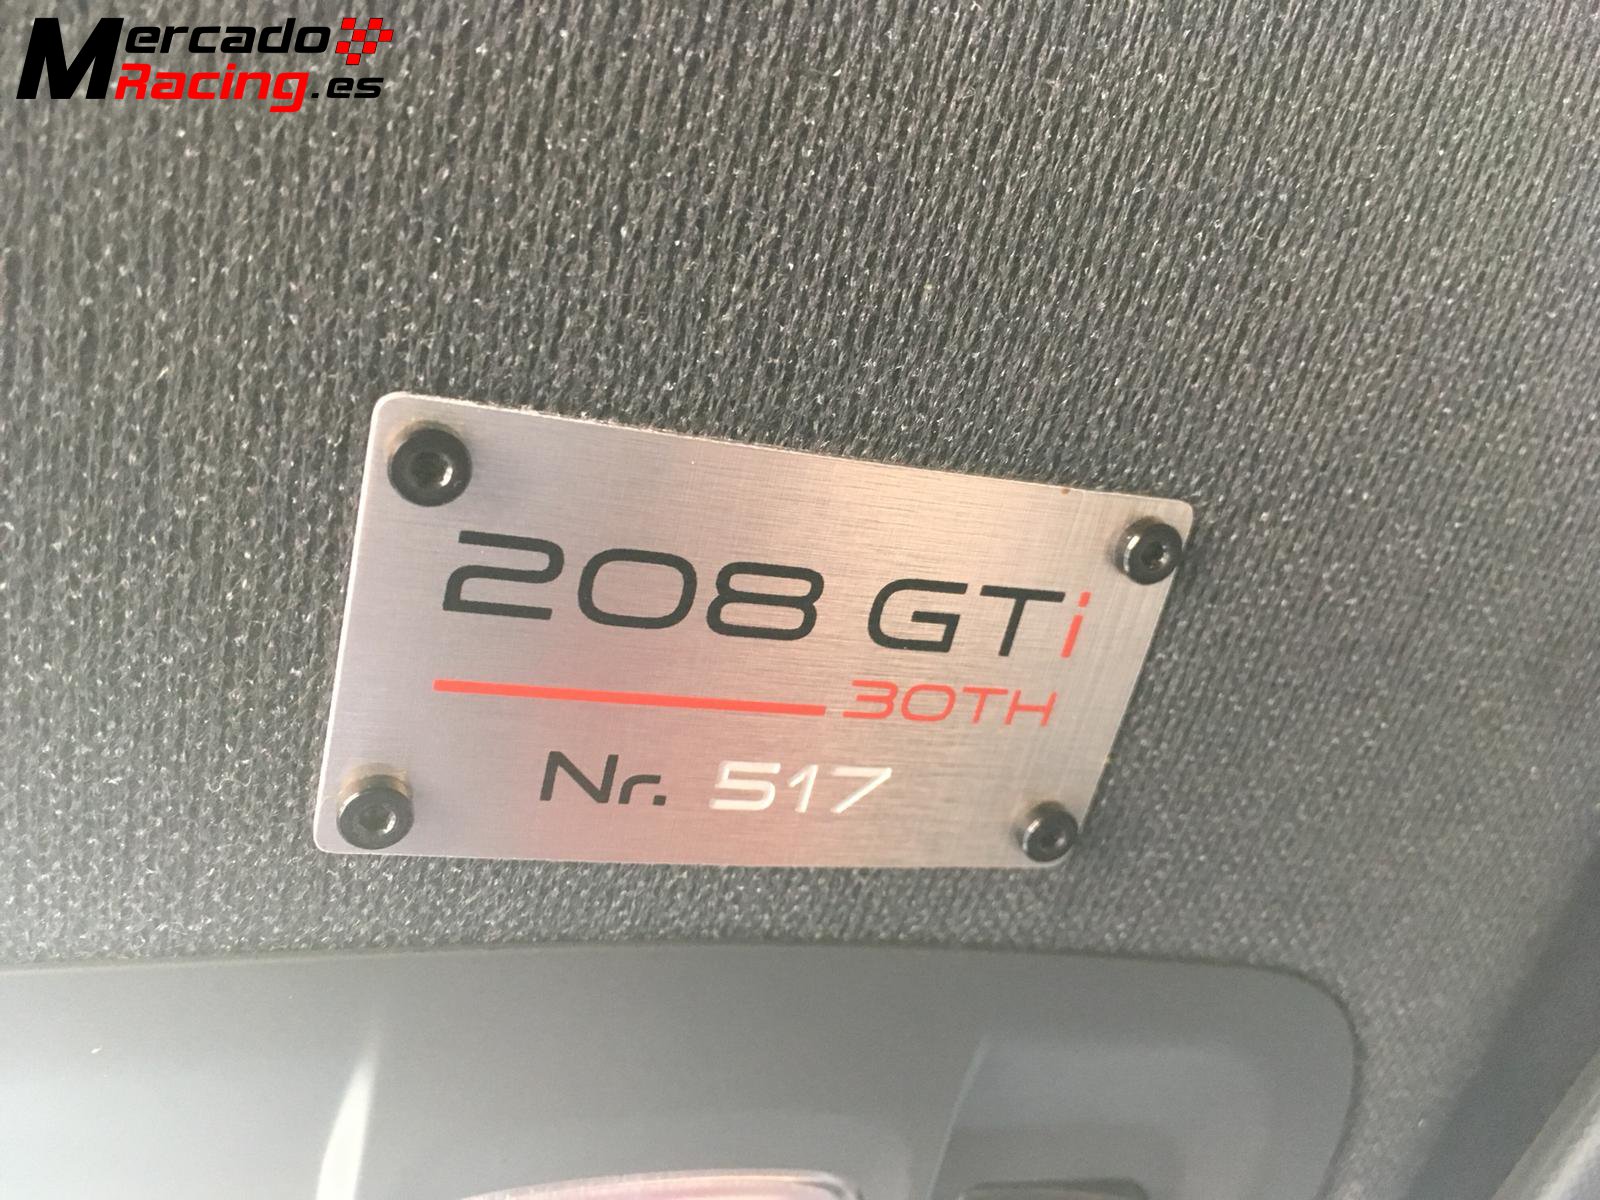 Peugeot 208 gti 30th